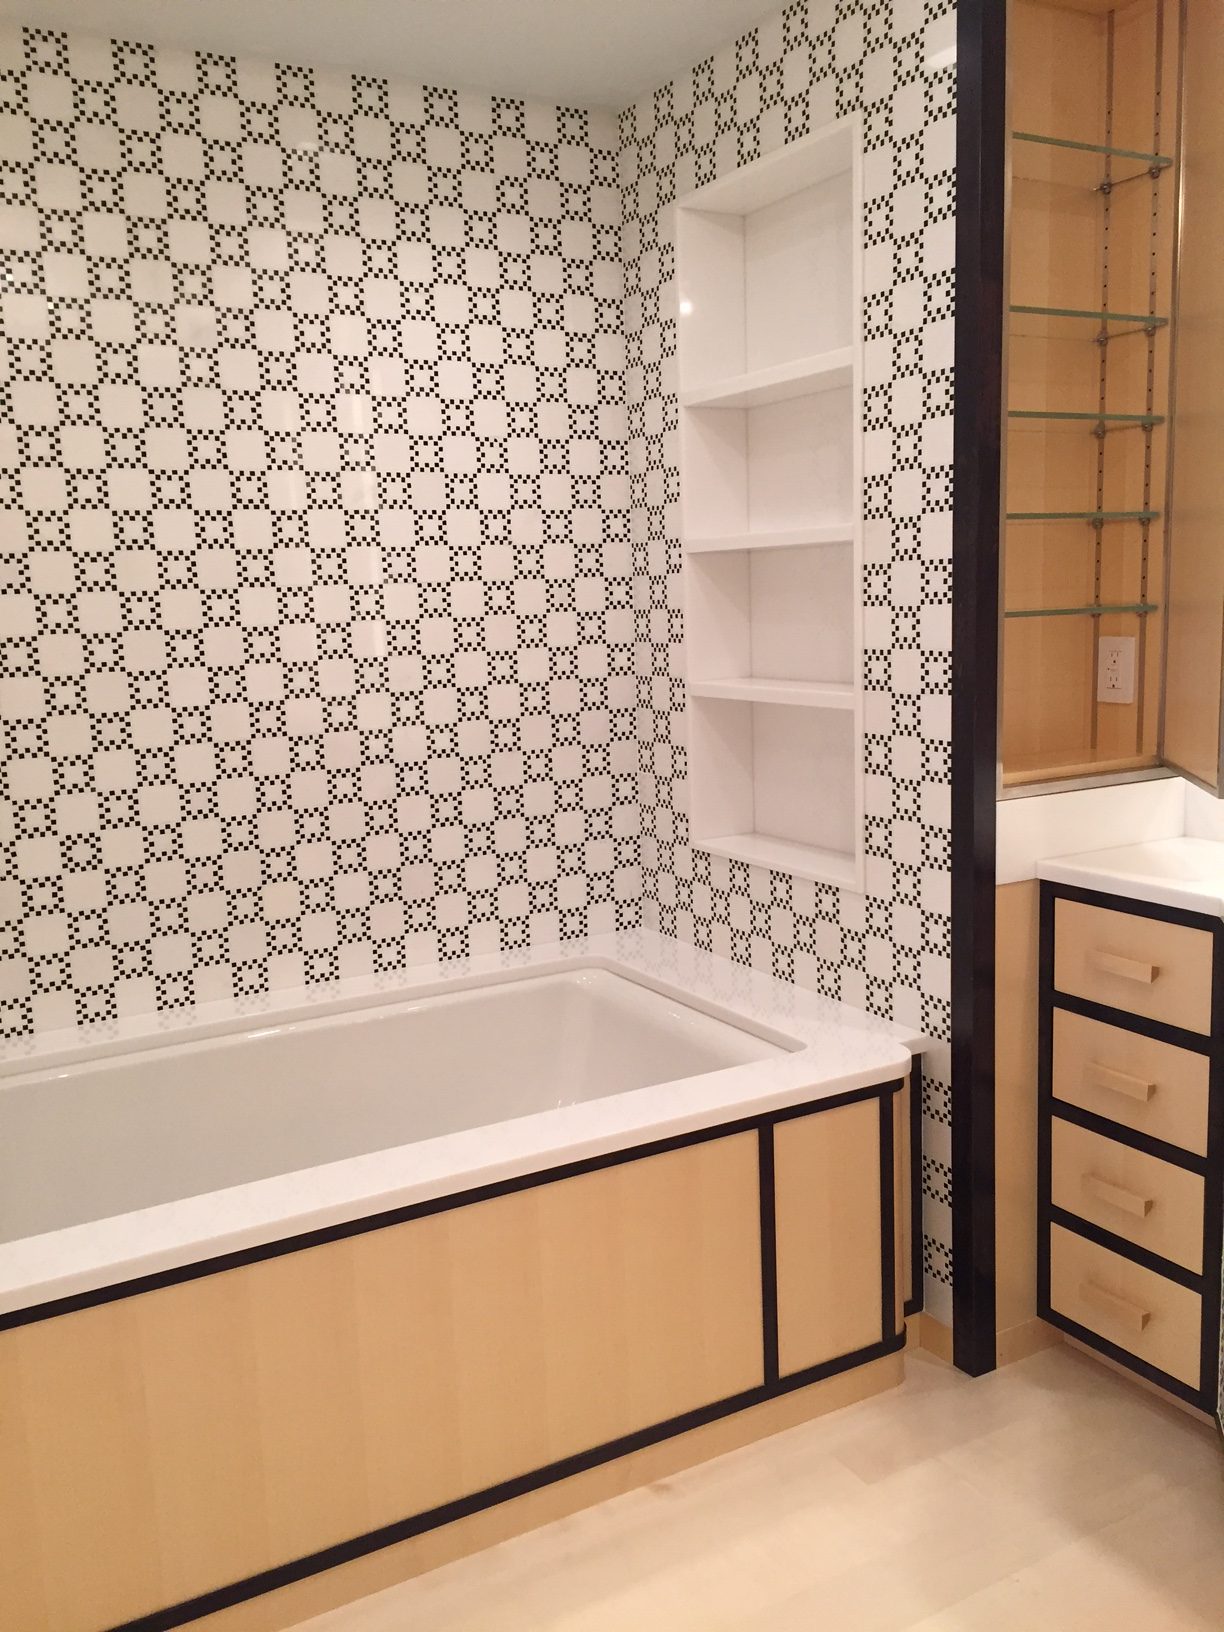 Master bathroom with custom belgium black and white thassos checkerboard